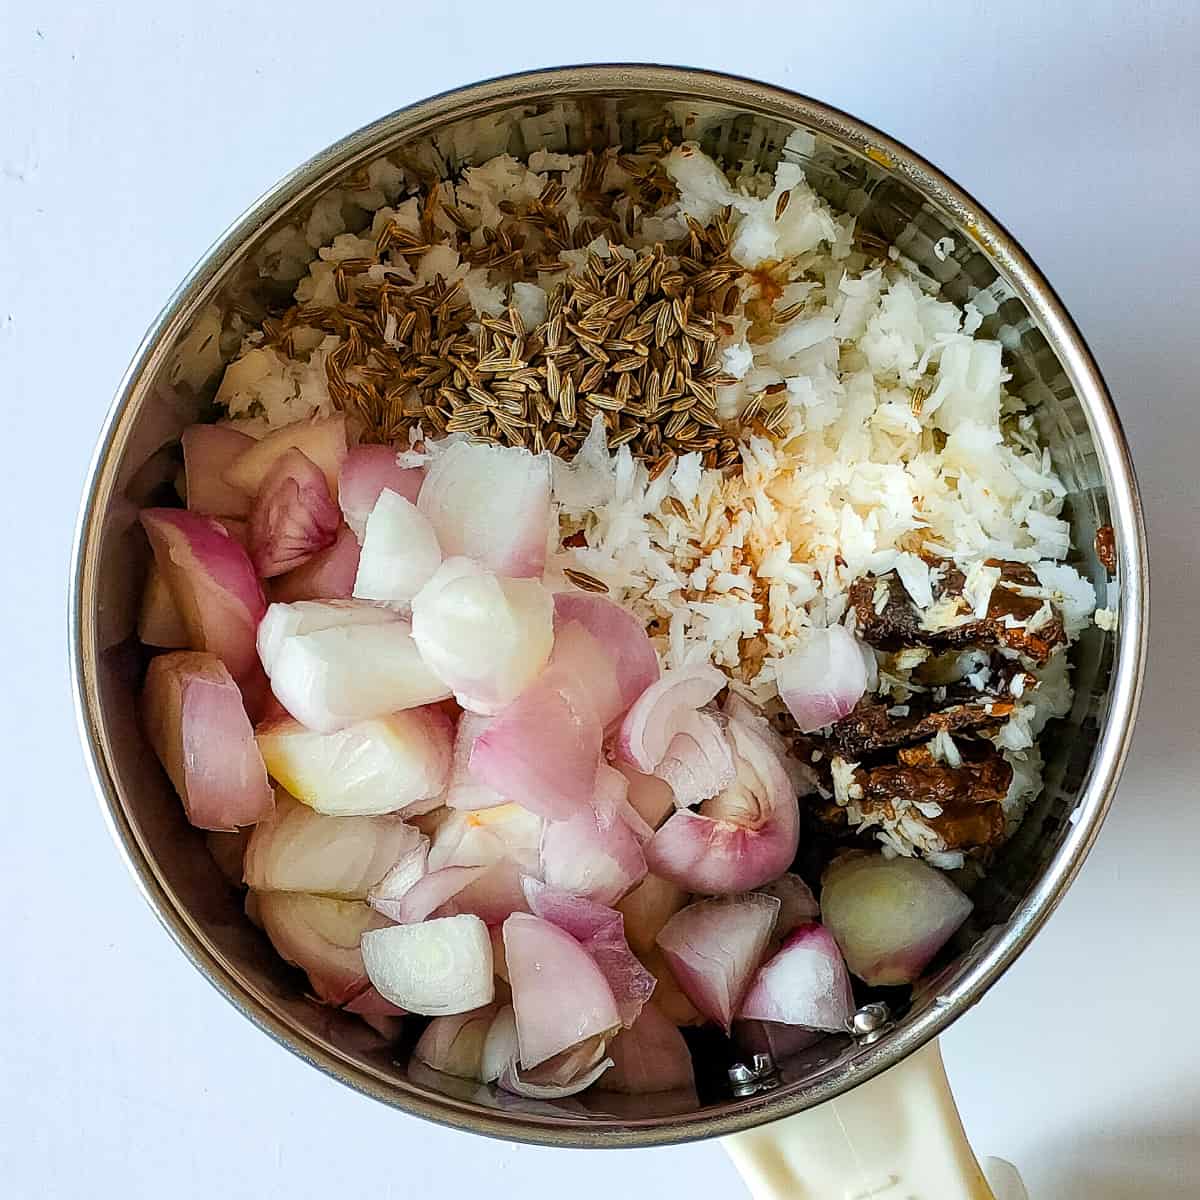 Ingredients for coconut onion paste in a blender jar.